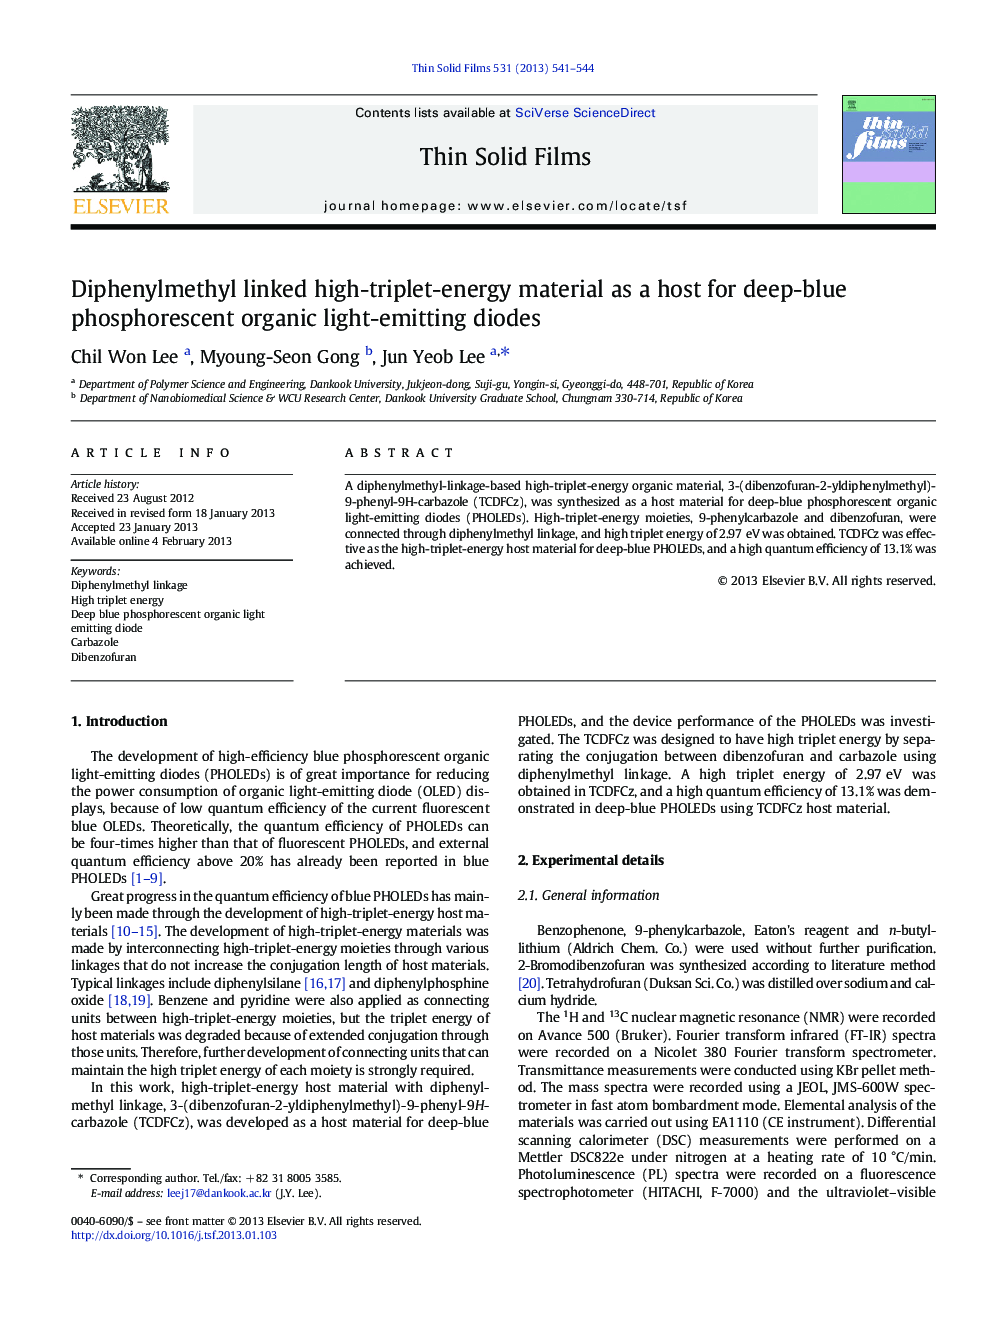 Diphenylmethyl linked high-triplet-energy material as a host for deep-blue phosphorescent organic light-emitting diodes